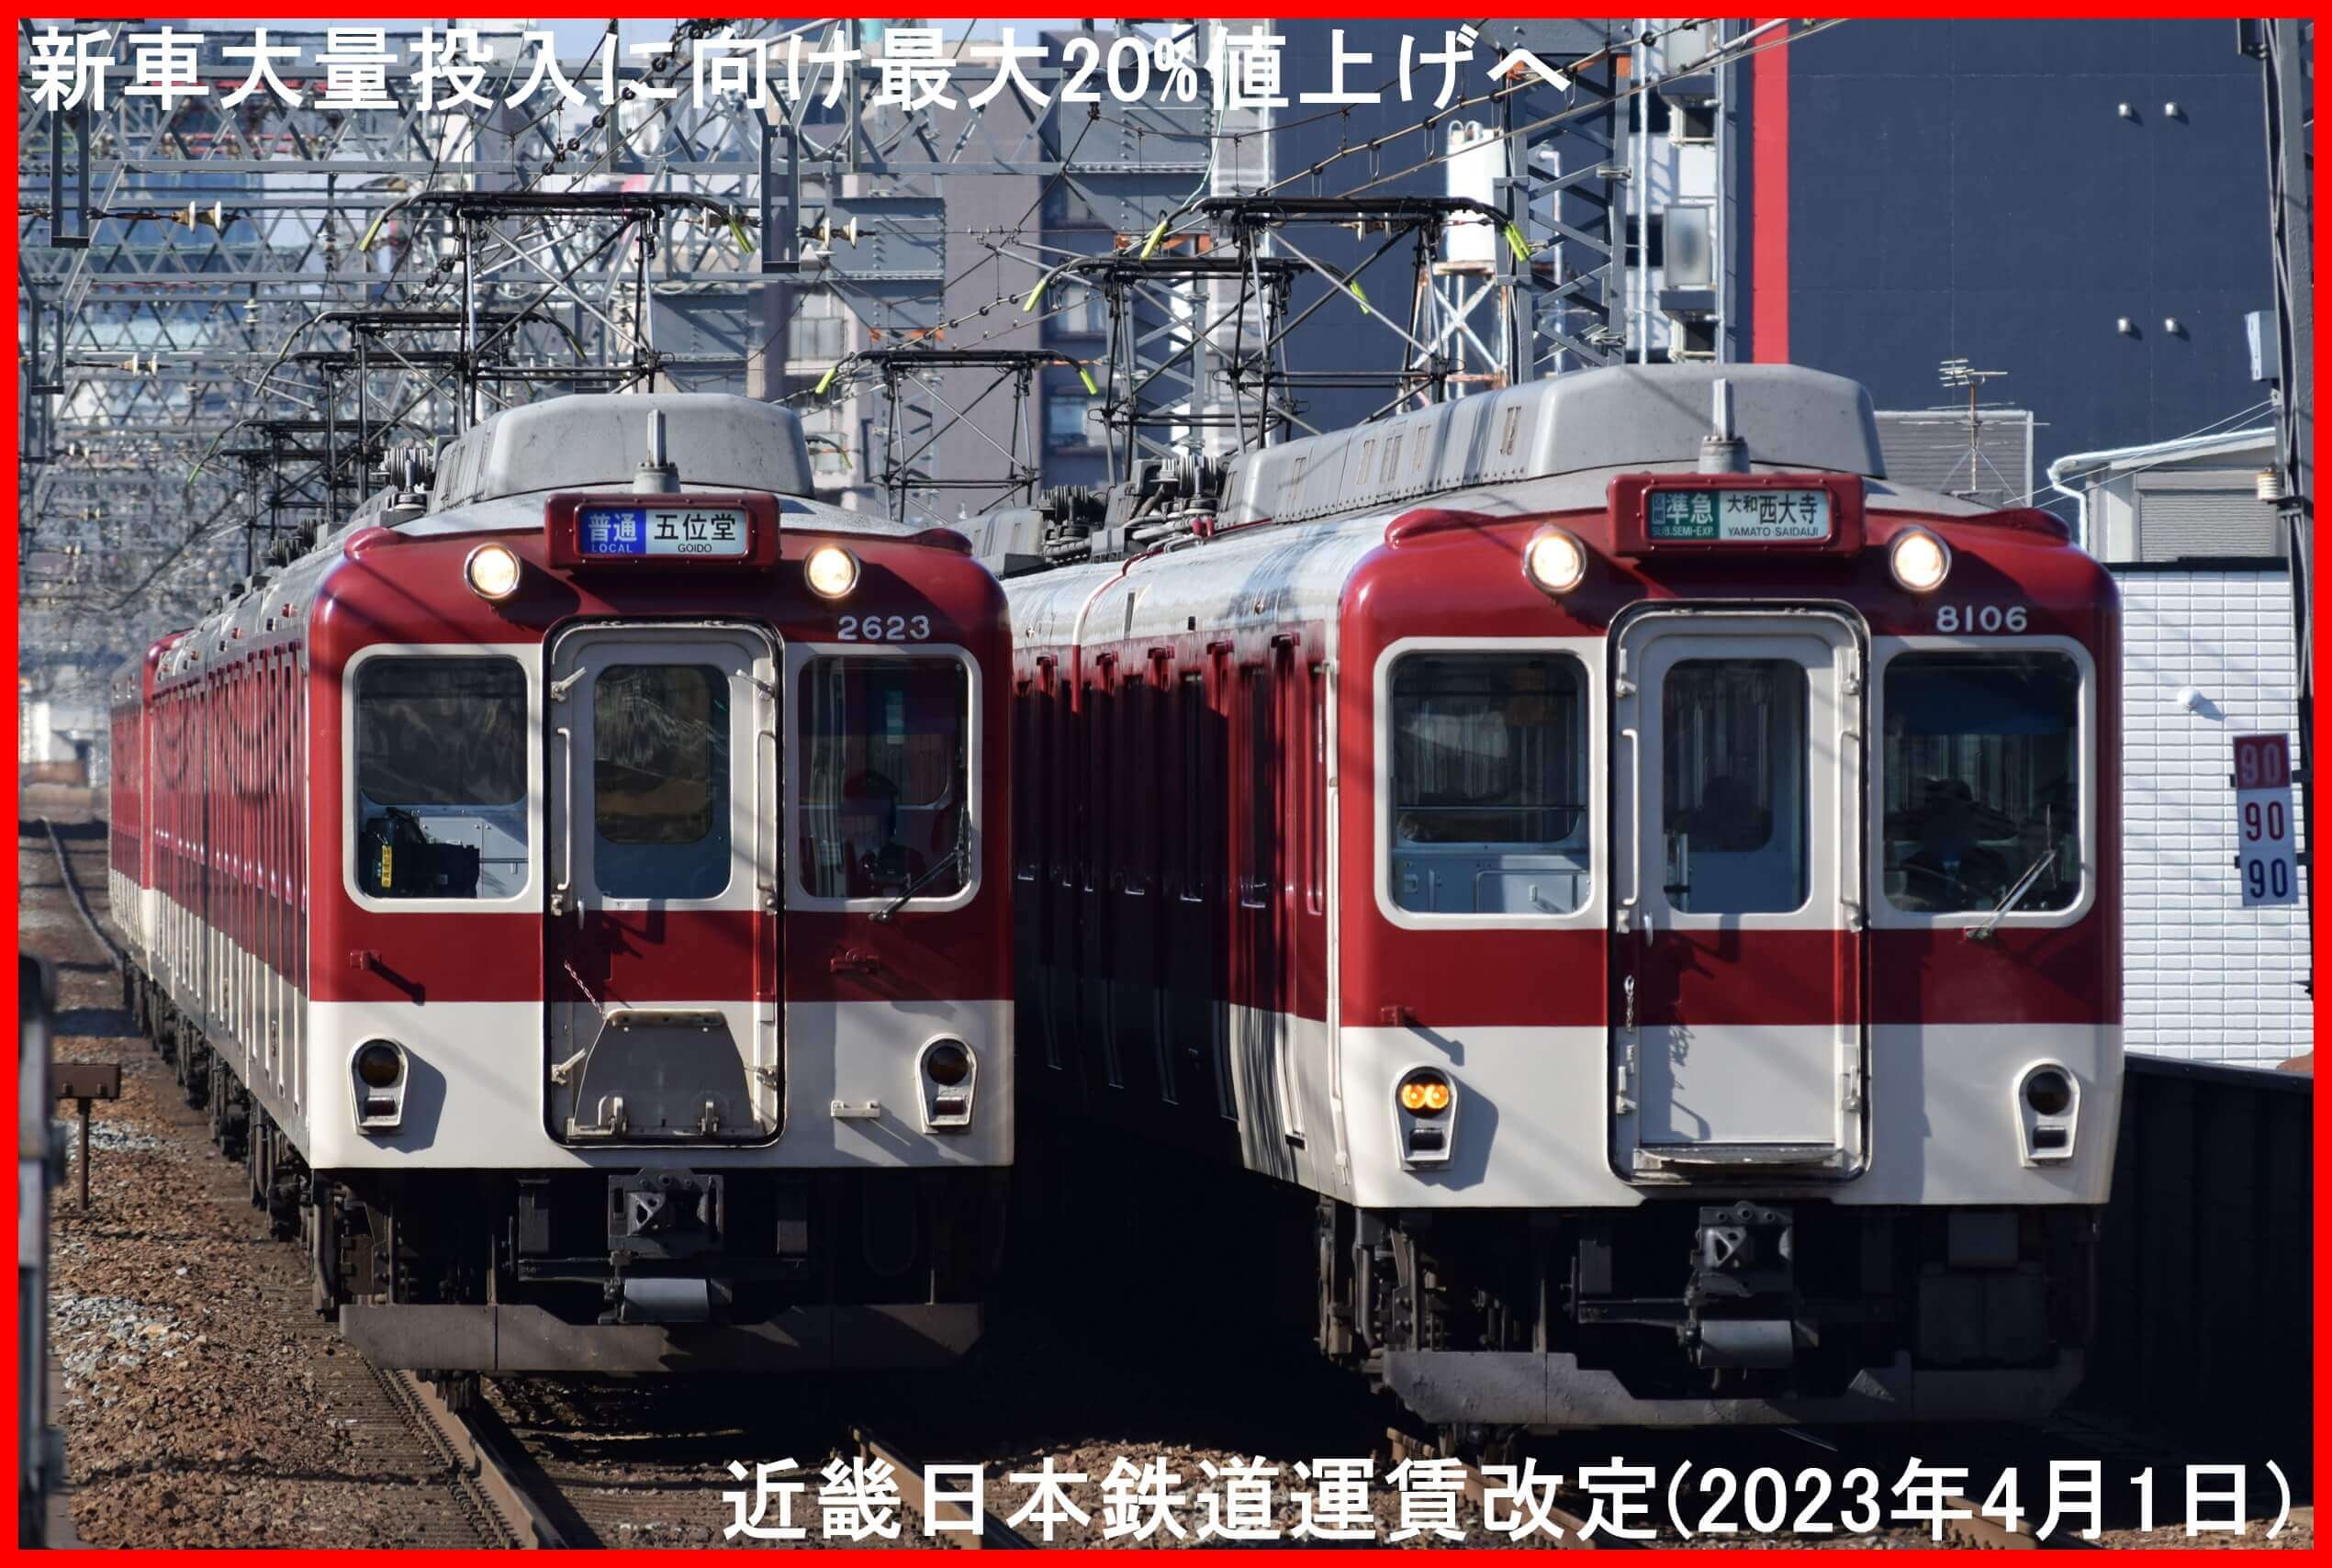 新車大量投入に向け最大20%値上げへ　近畿日本鉄道運賃改定(2023年4月1日)